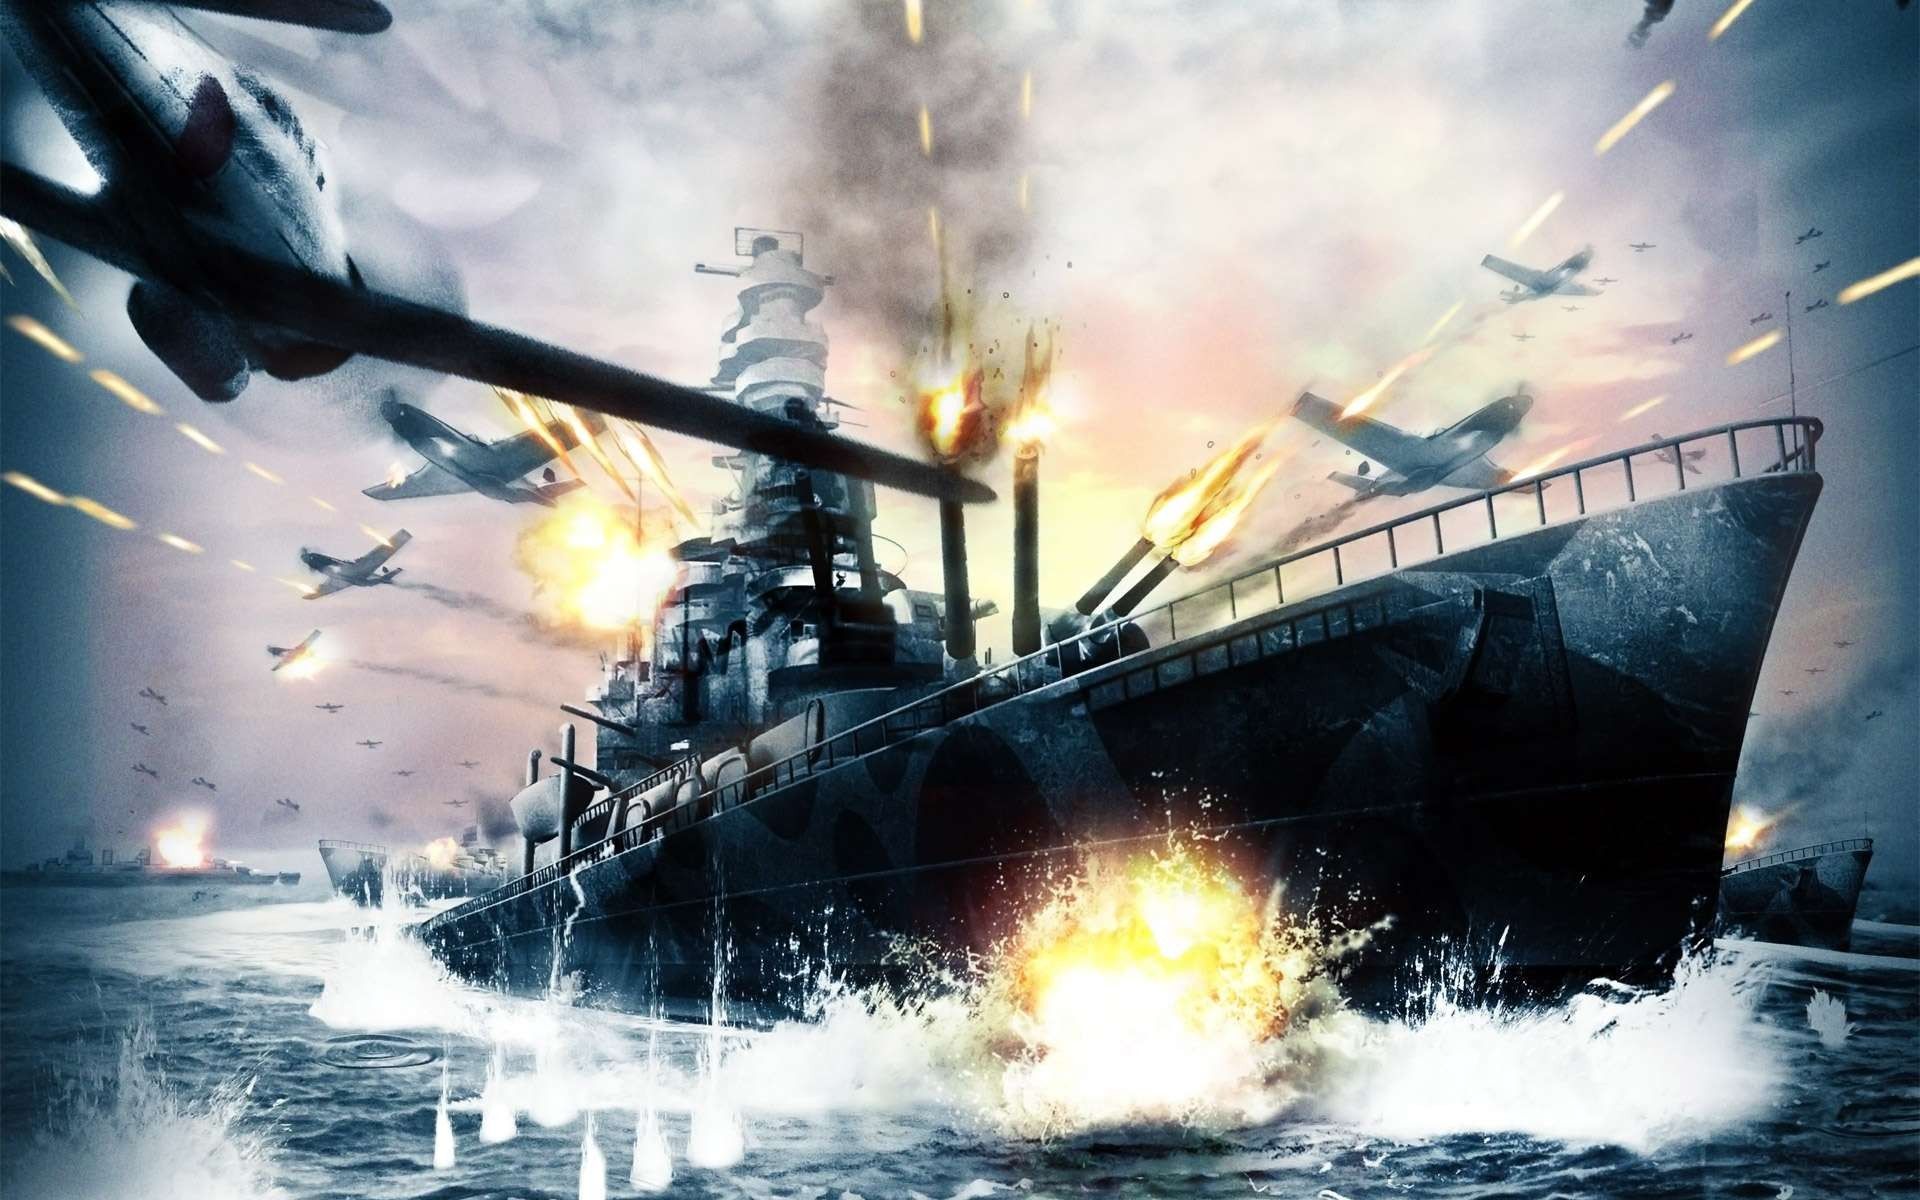 Battleship Wallpaper. Battleship War Wallpaper, Battleship Post Apocalyptic Wallpaper And Battleship Wallpaper